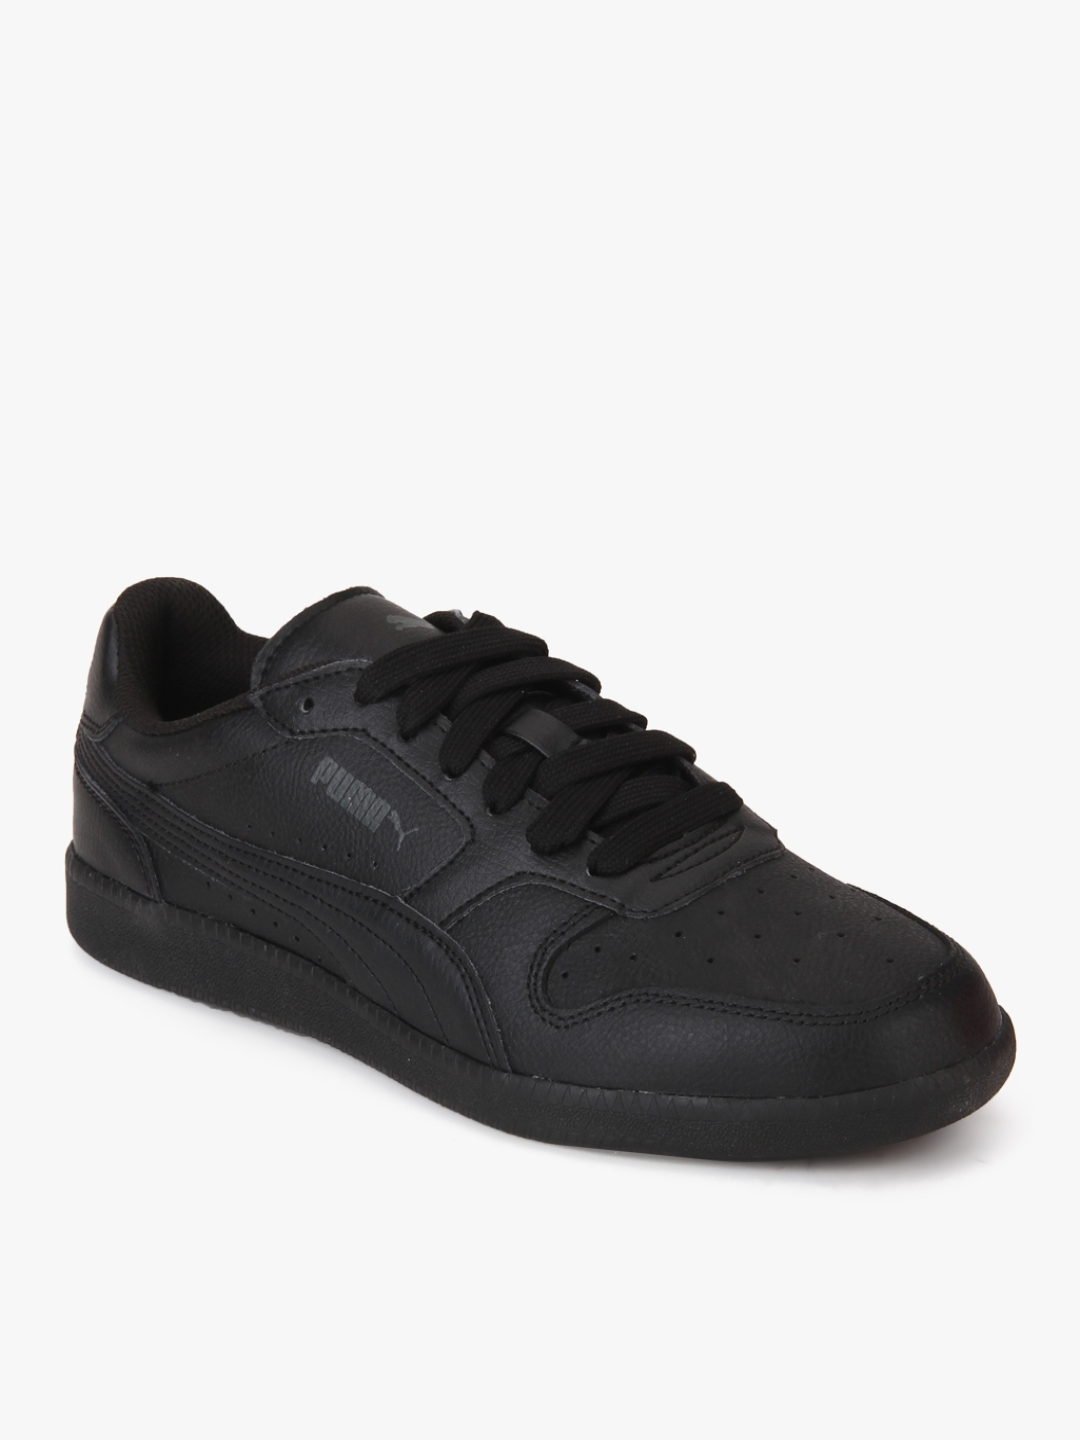 Resplandor champán Habitat Buy Icra Trainer L Black Sneakers - Casual Shoes for Men 7636125 | Myntra